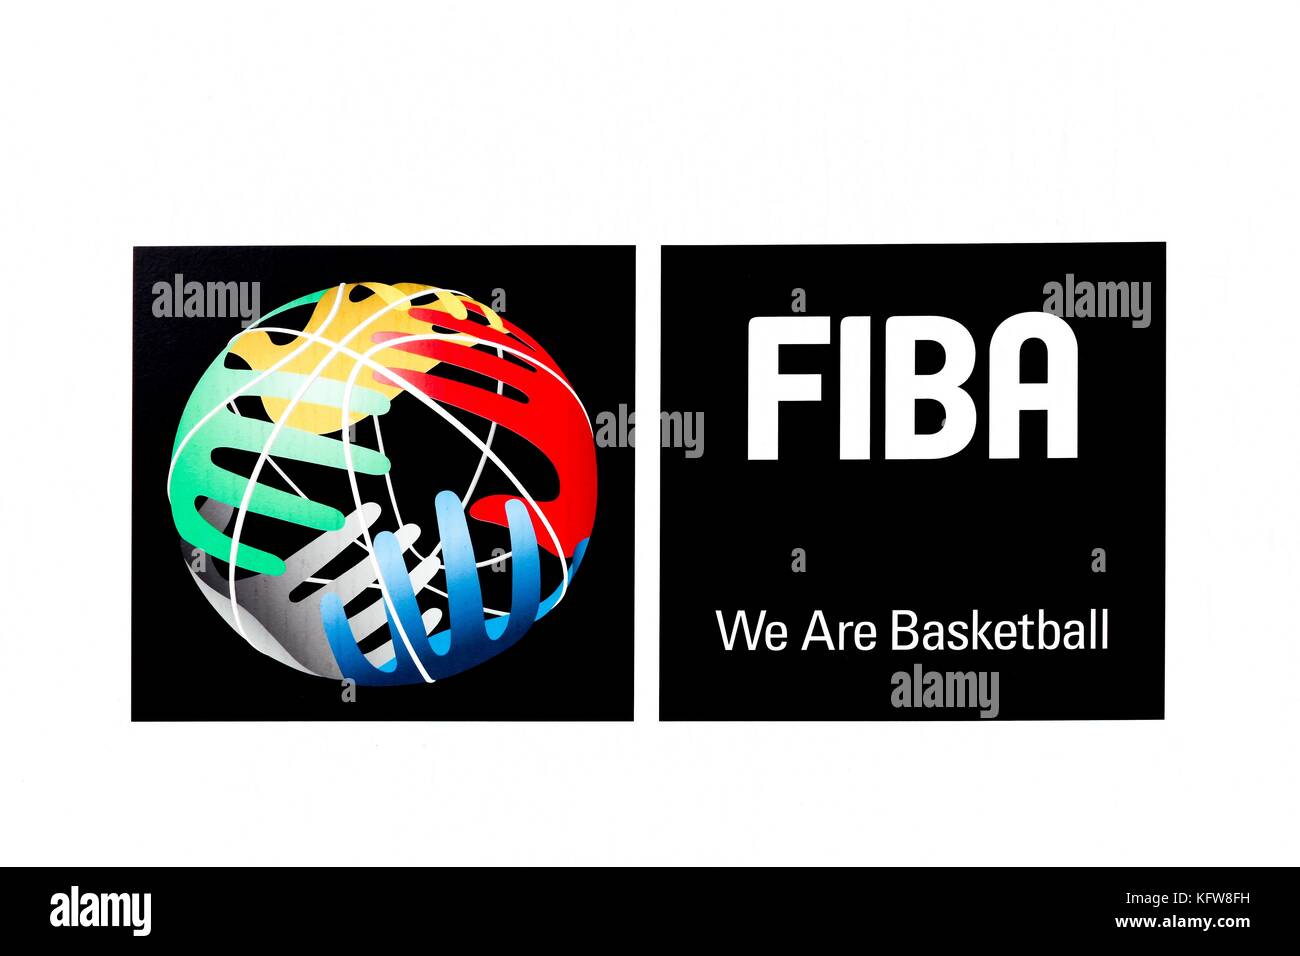 Mies, Switzerland - October 1, 2017: FIBA logo on a wall at the FIBA headquarters in Mies, Switzerland Stock Photo